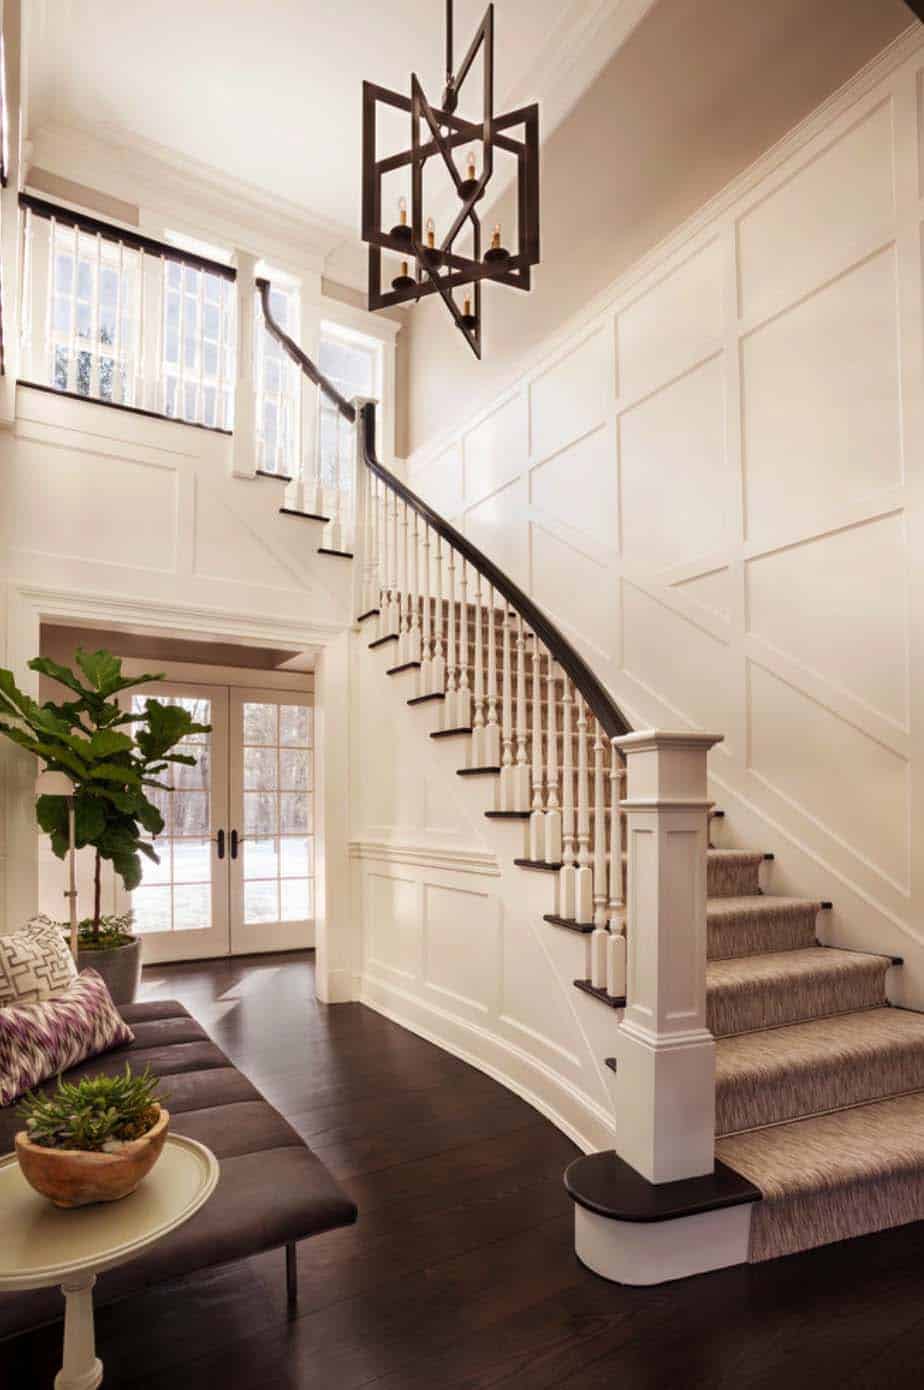 Traditional Style Home-Garrison Hullinger Interior Design-03-1 Kindesign